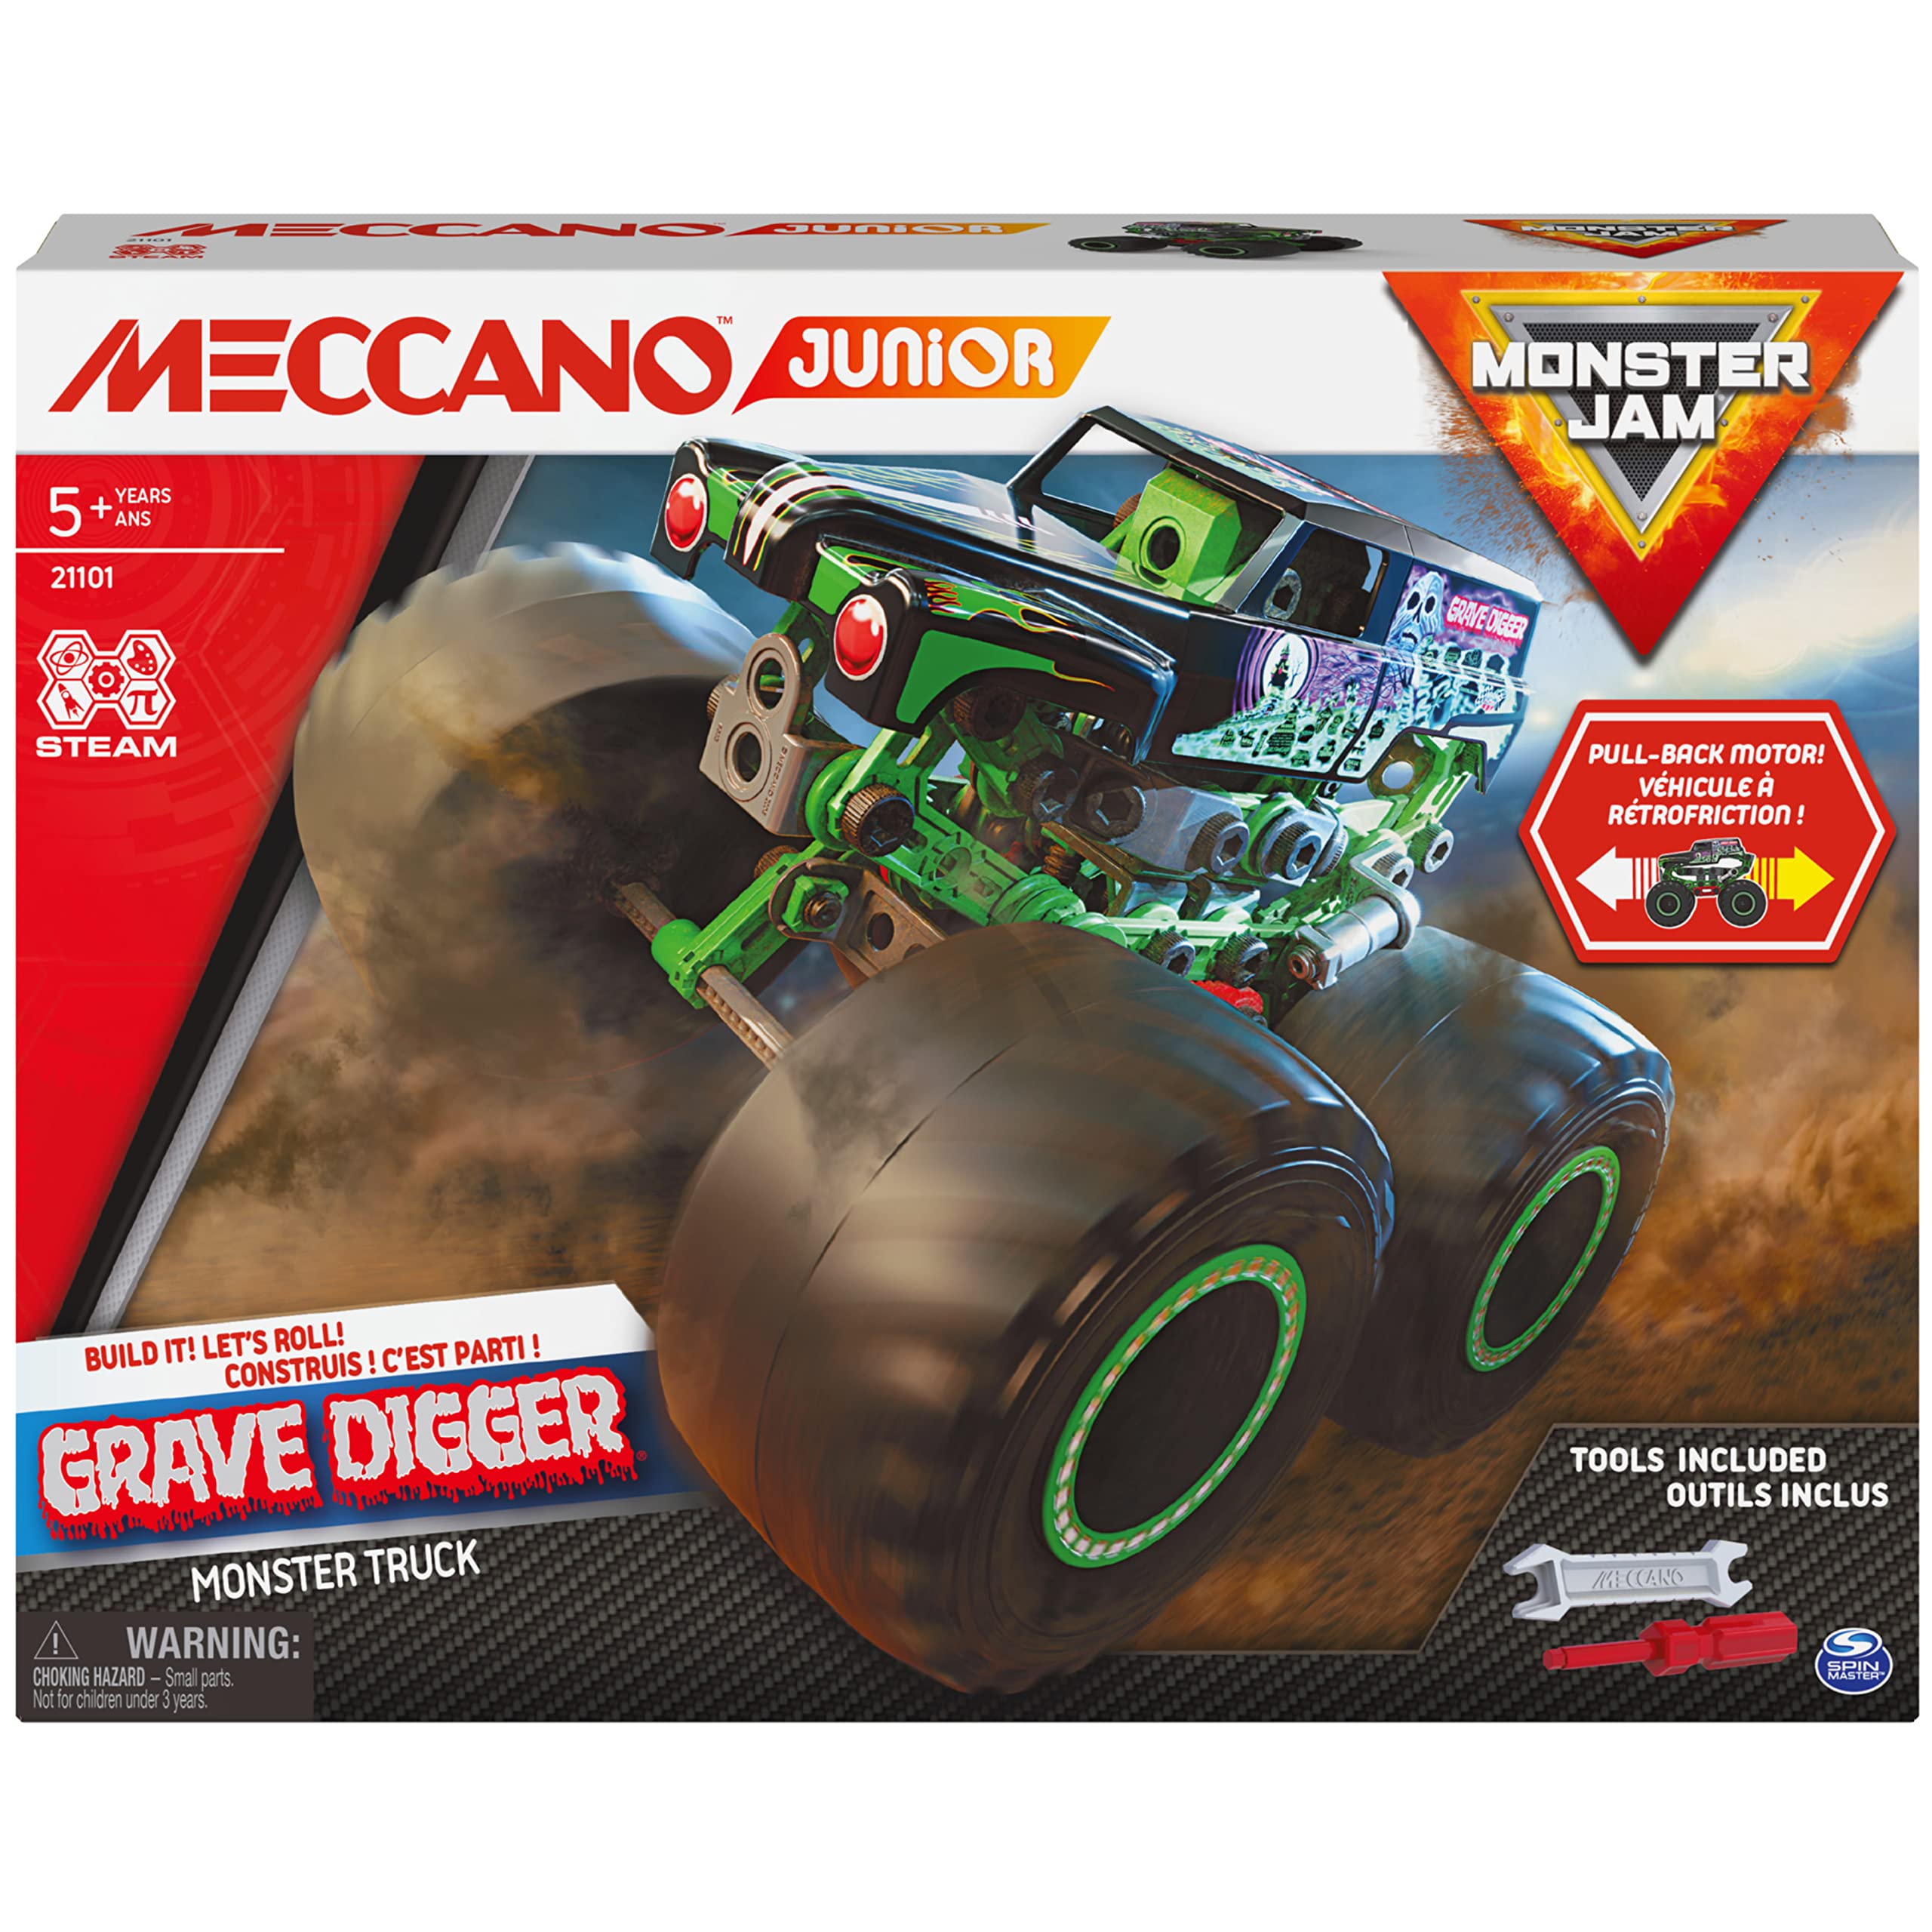 Meccano Junior, Official Monster Jam Grave Digger Monster Truck STEM Model Building Kit with Pull-Back Motor, Kids Toys for Ages